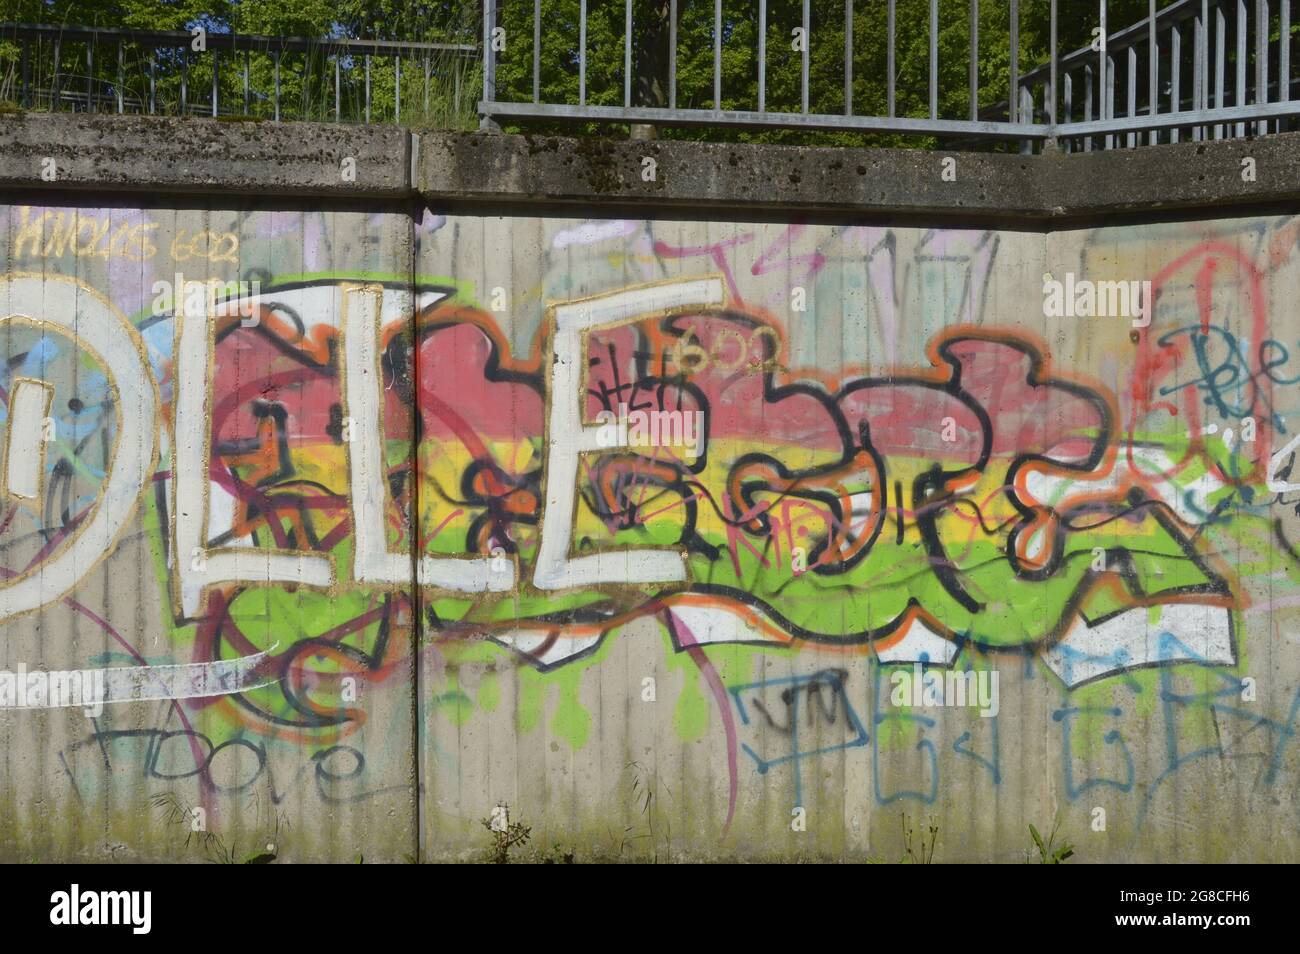 Graffiti on a concrete wall Stock Photo